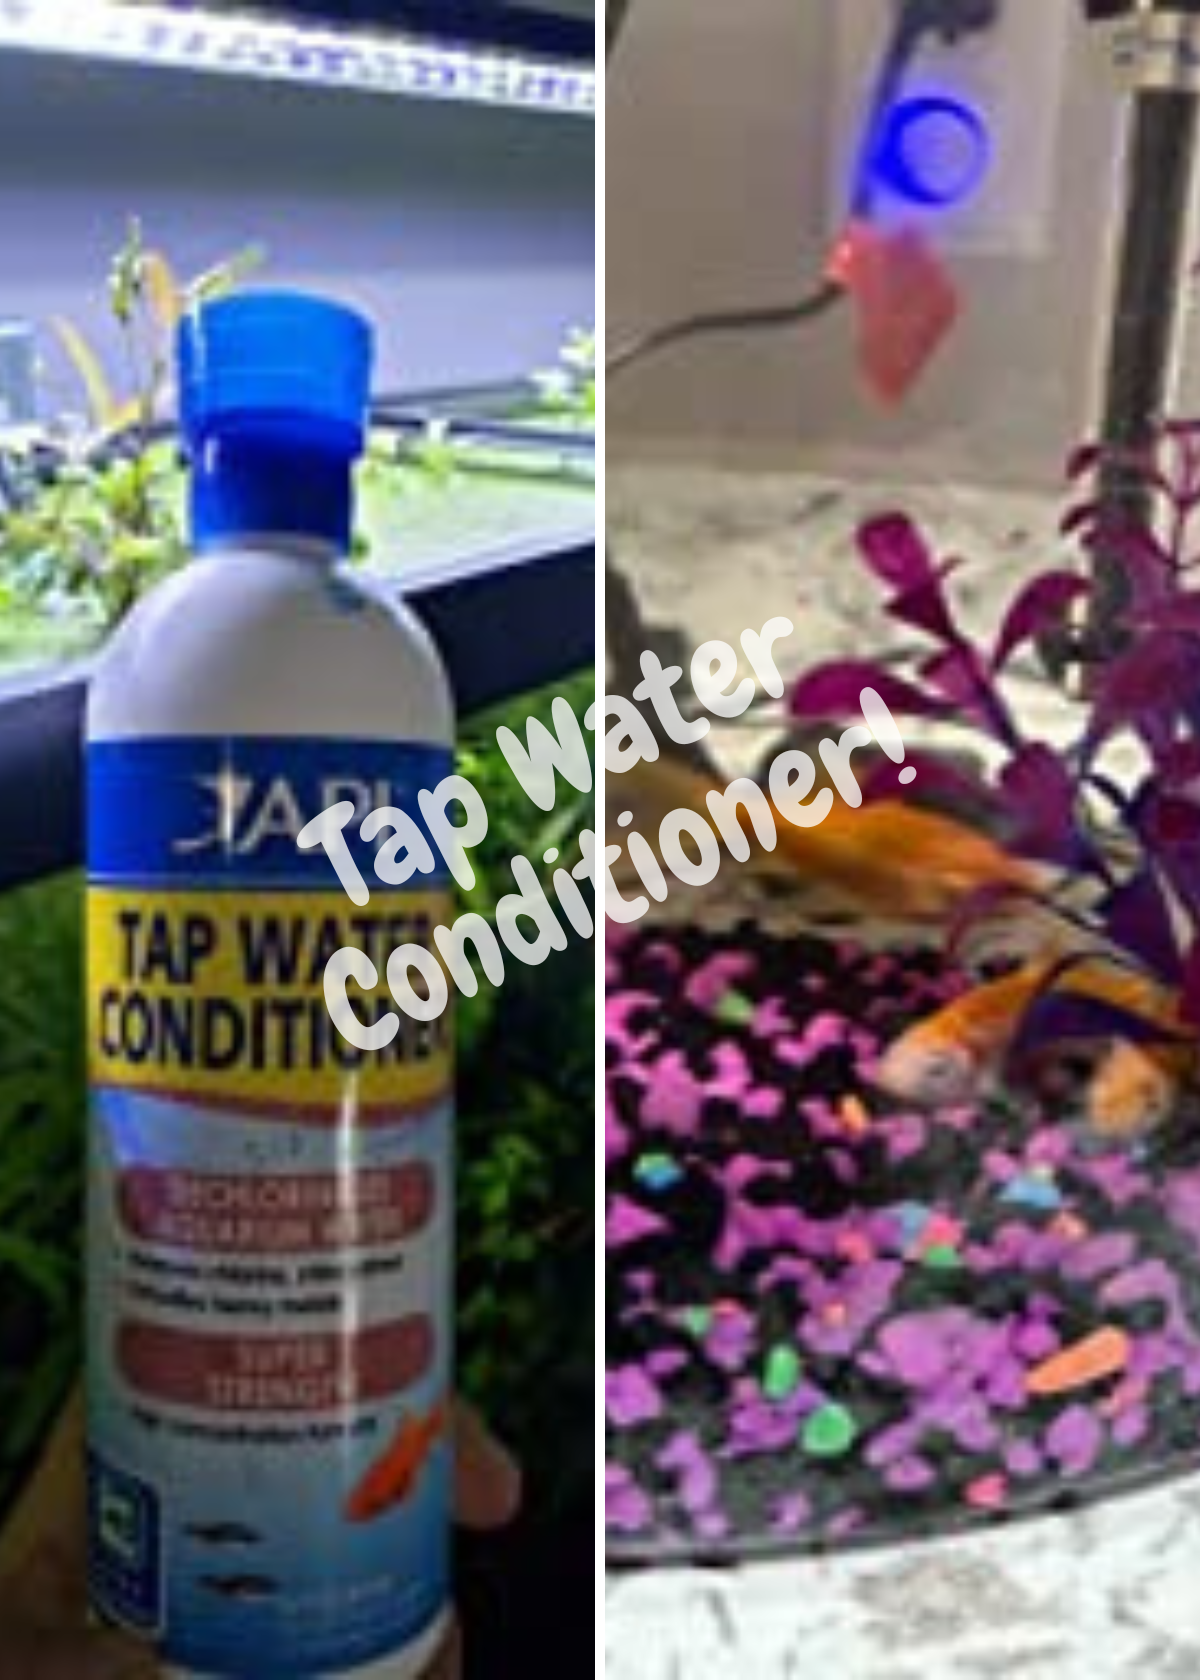 Aquarium Water Conditioners for Tap Water